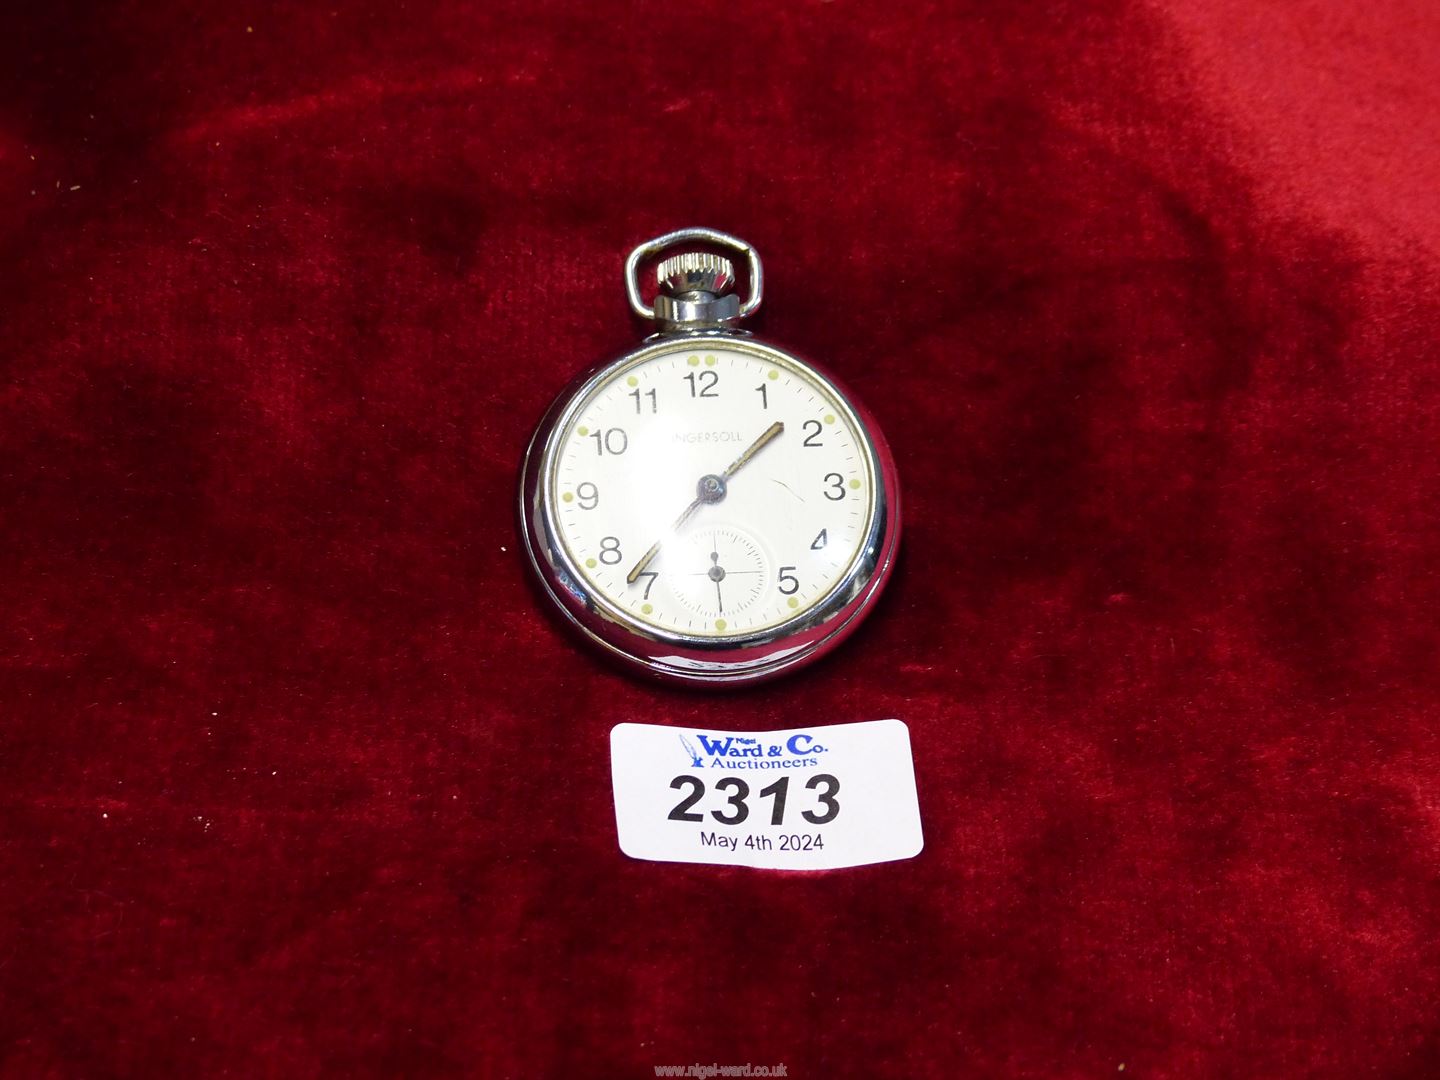 A vintage Ingersoll silver tone pocket watch.